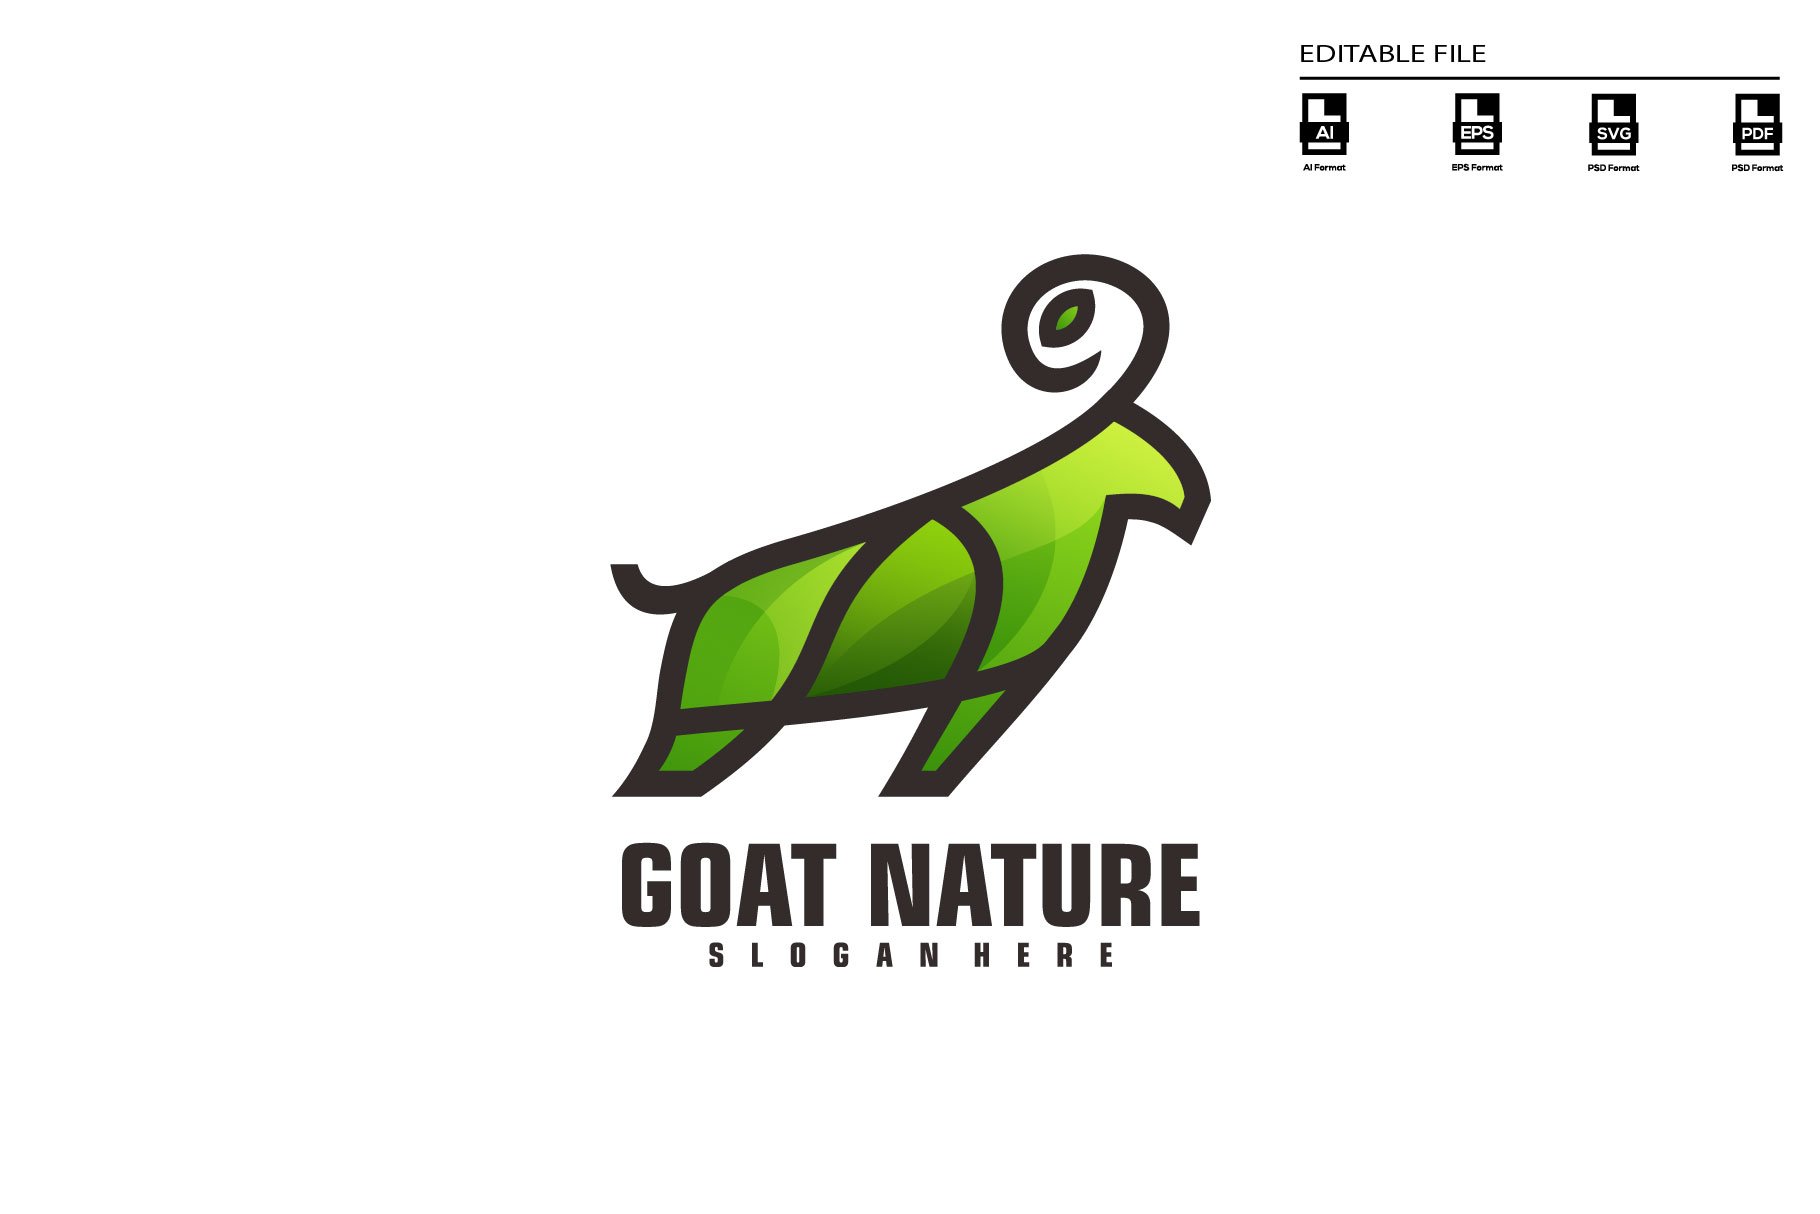 Goat nature logo cover image.